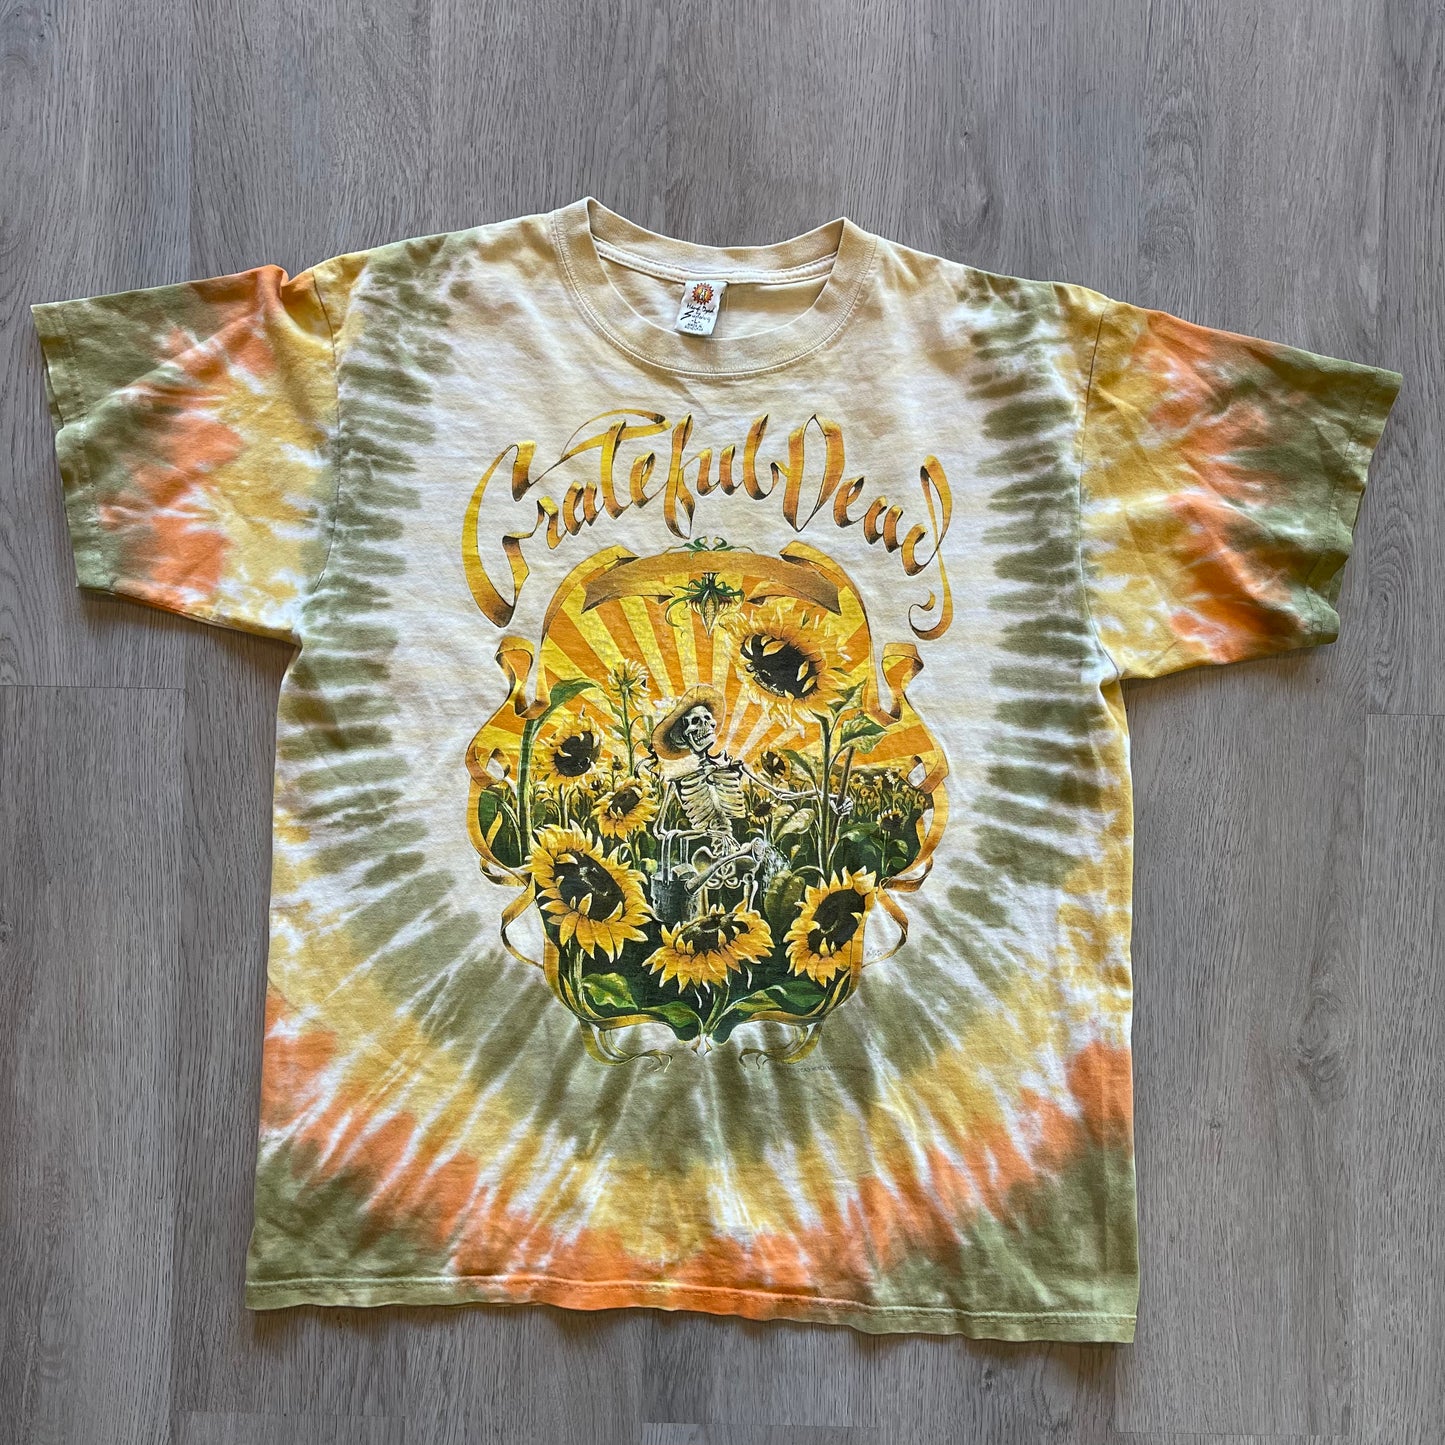 Vintage 1994 Grateful Dead Bear Garden Sun Flower Tie Dye Tour Concert